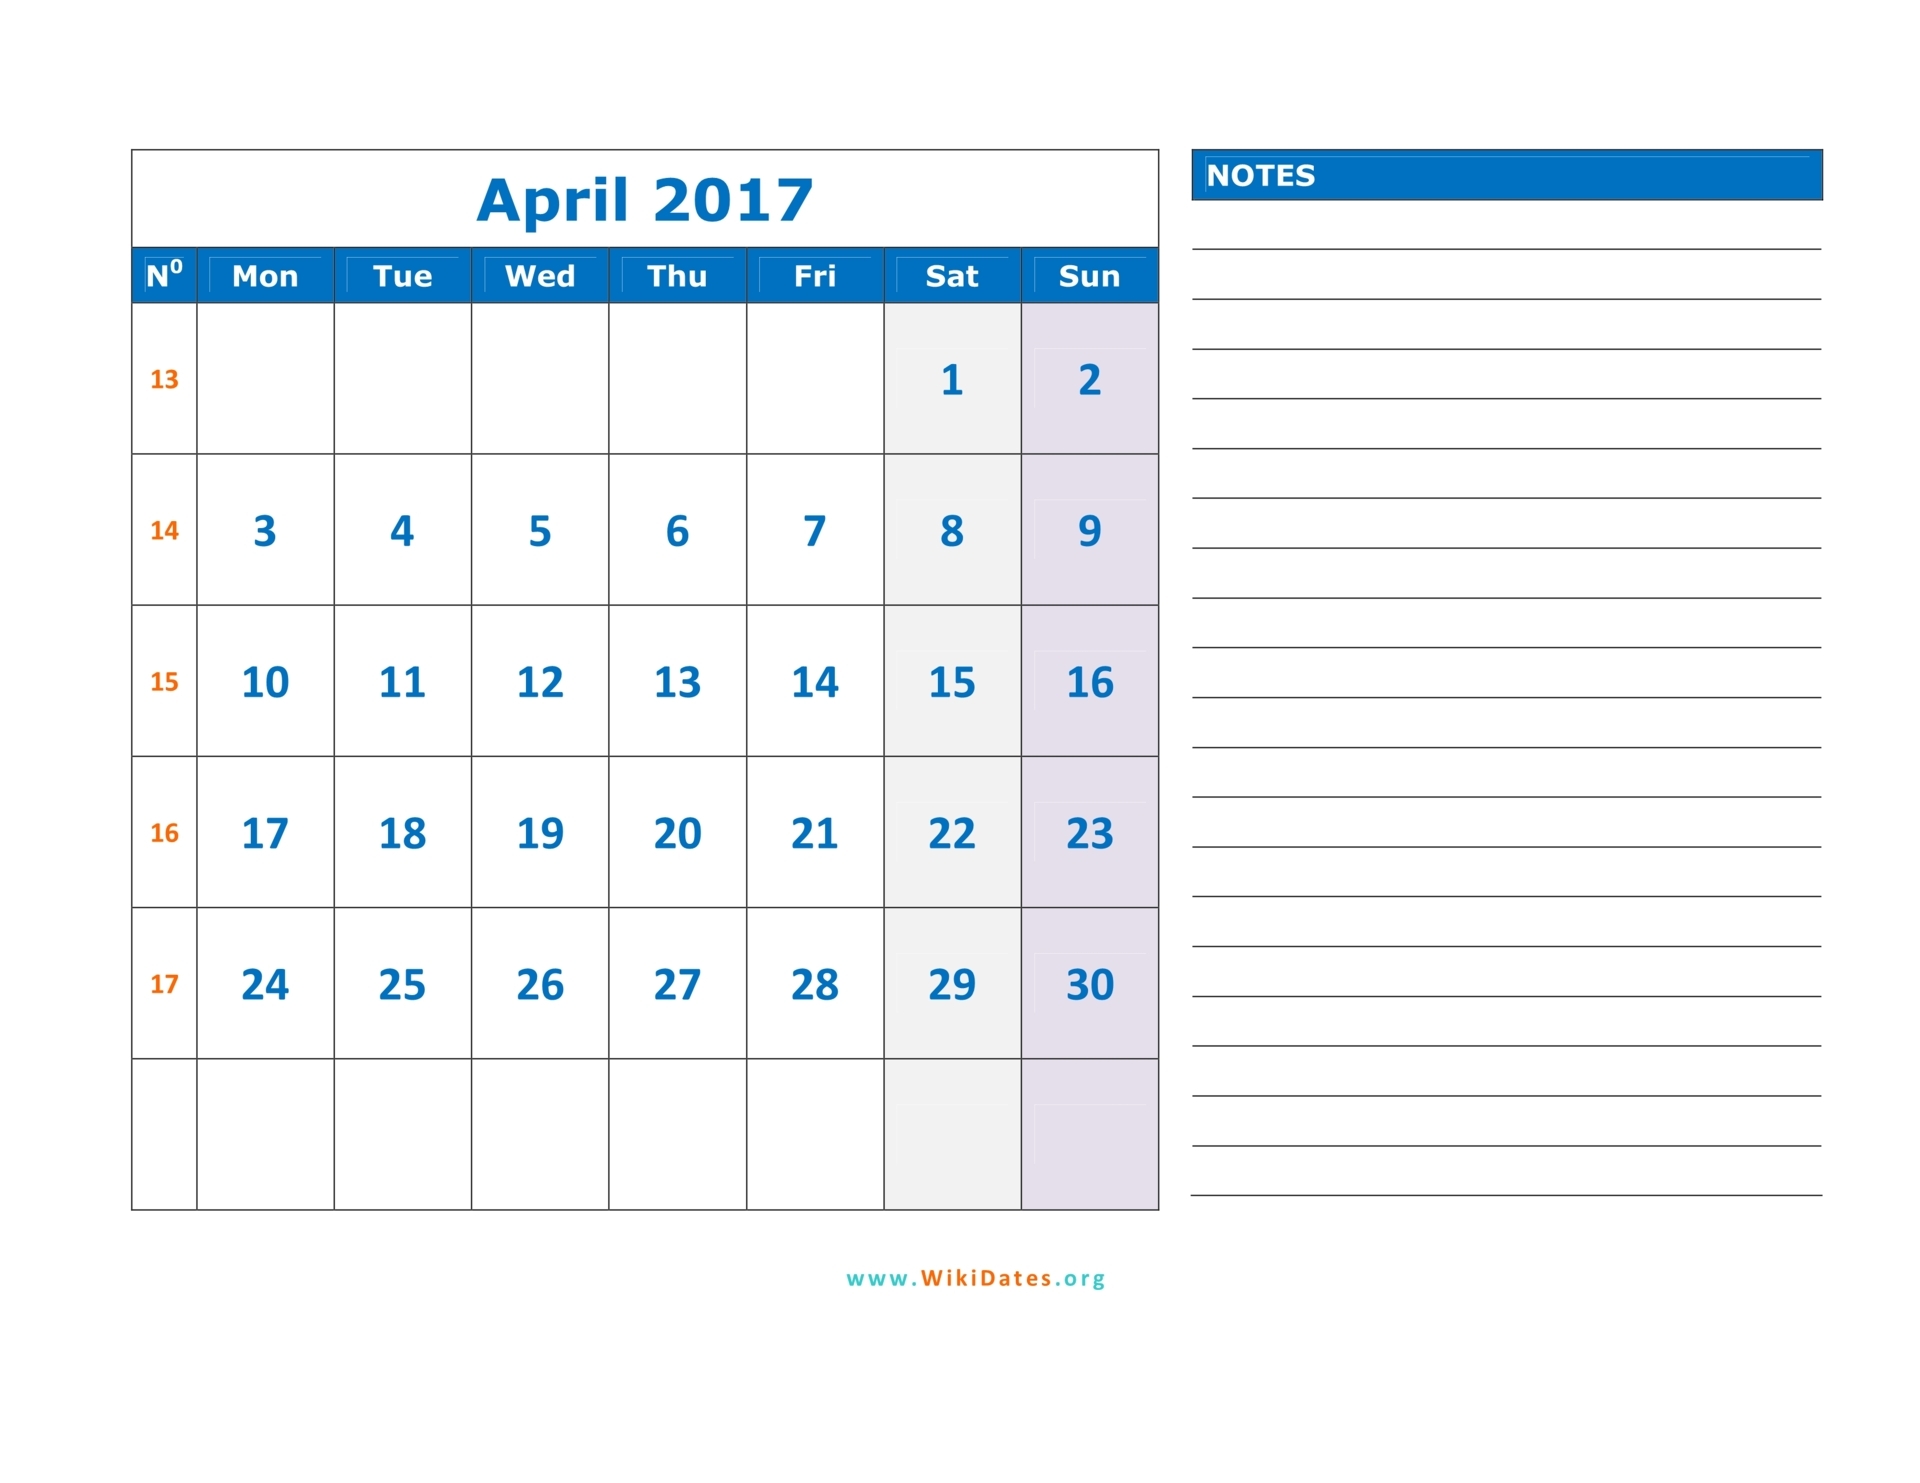 april-2017-calendar-wikidates